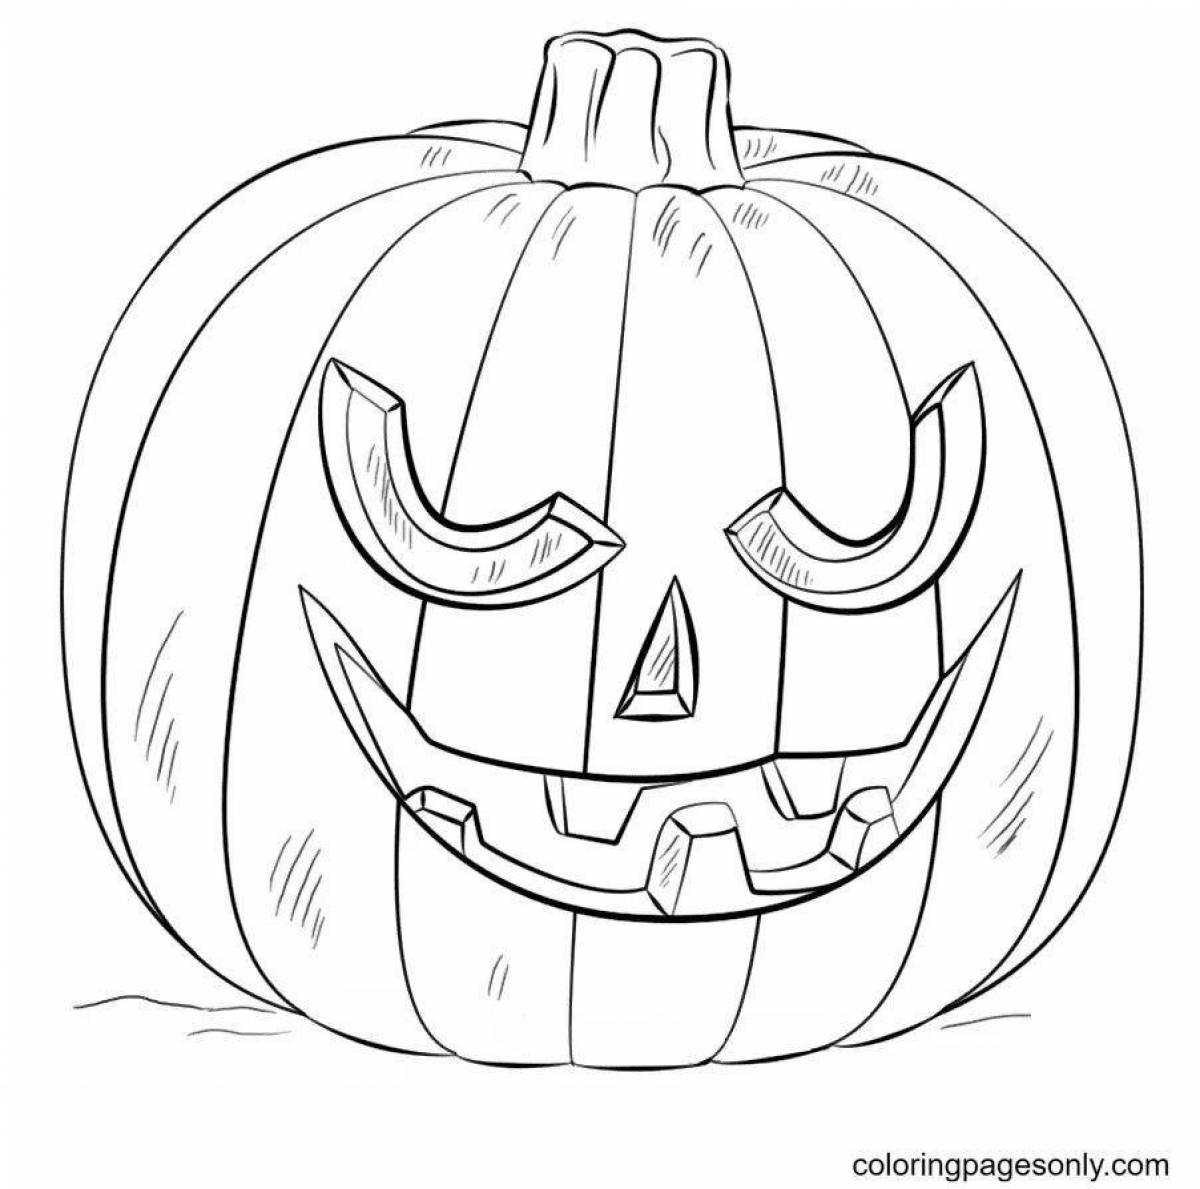 Spooky halloween pumpkin coloring page